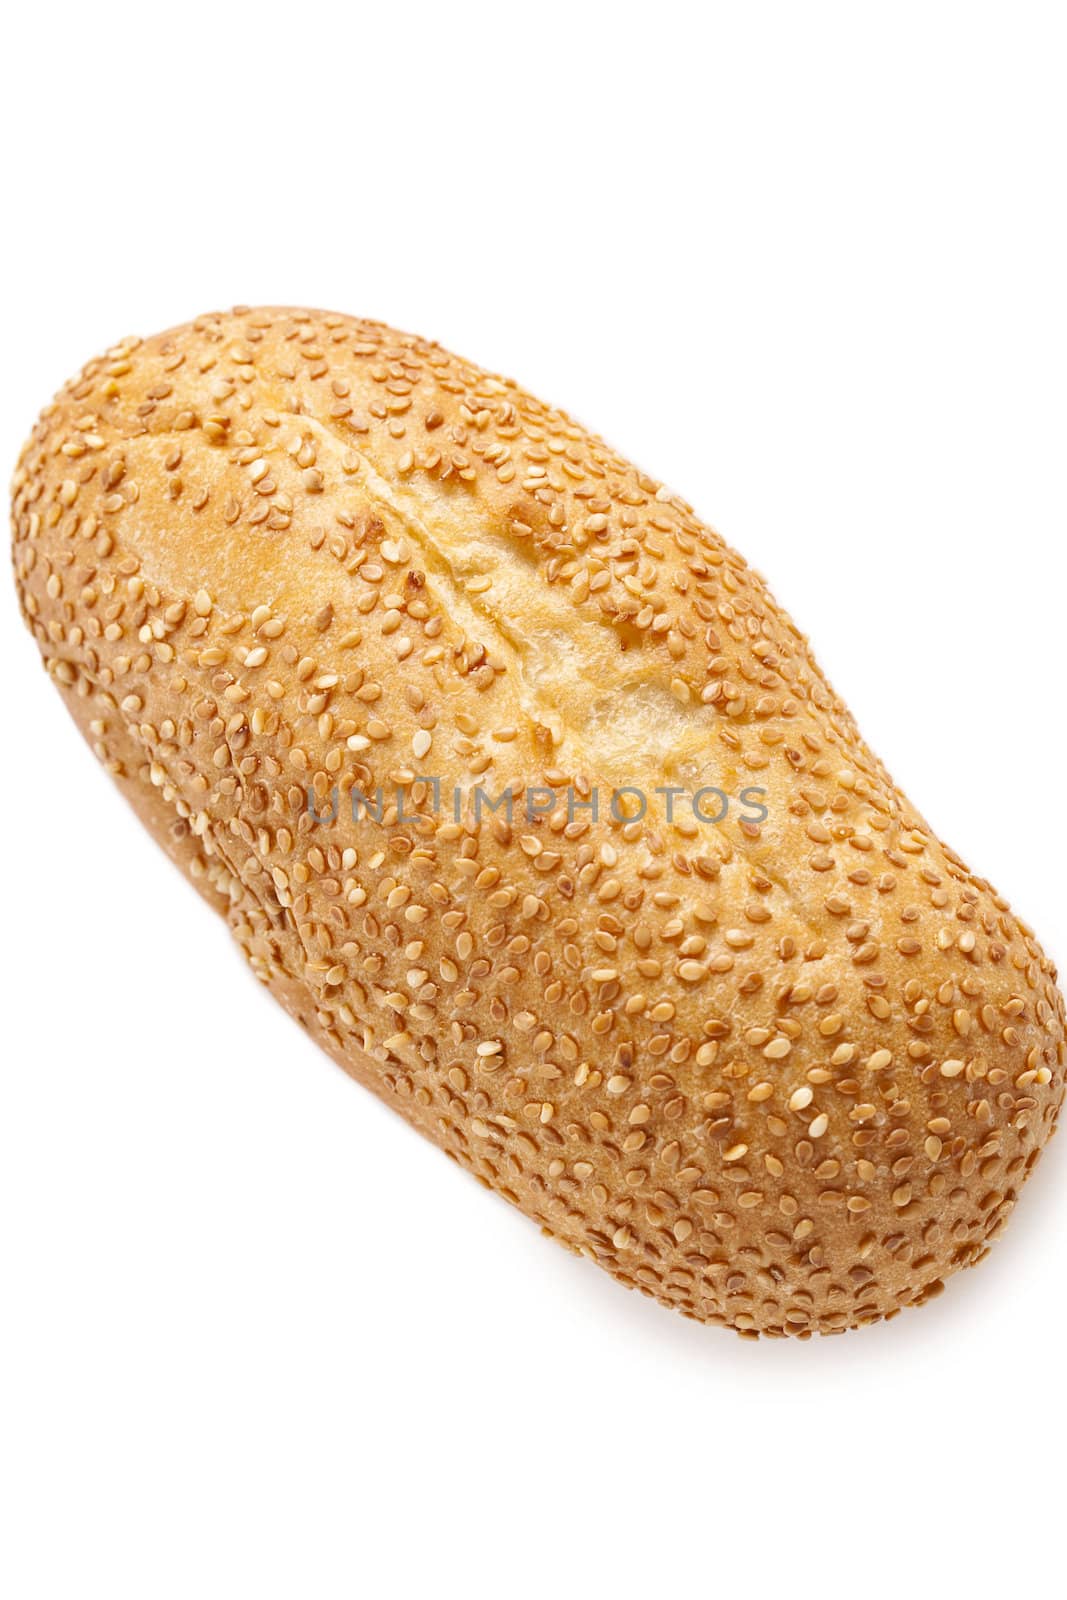 fresh bread by kozzi